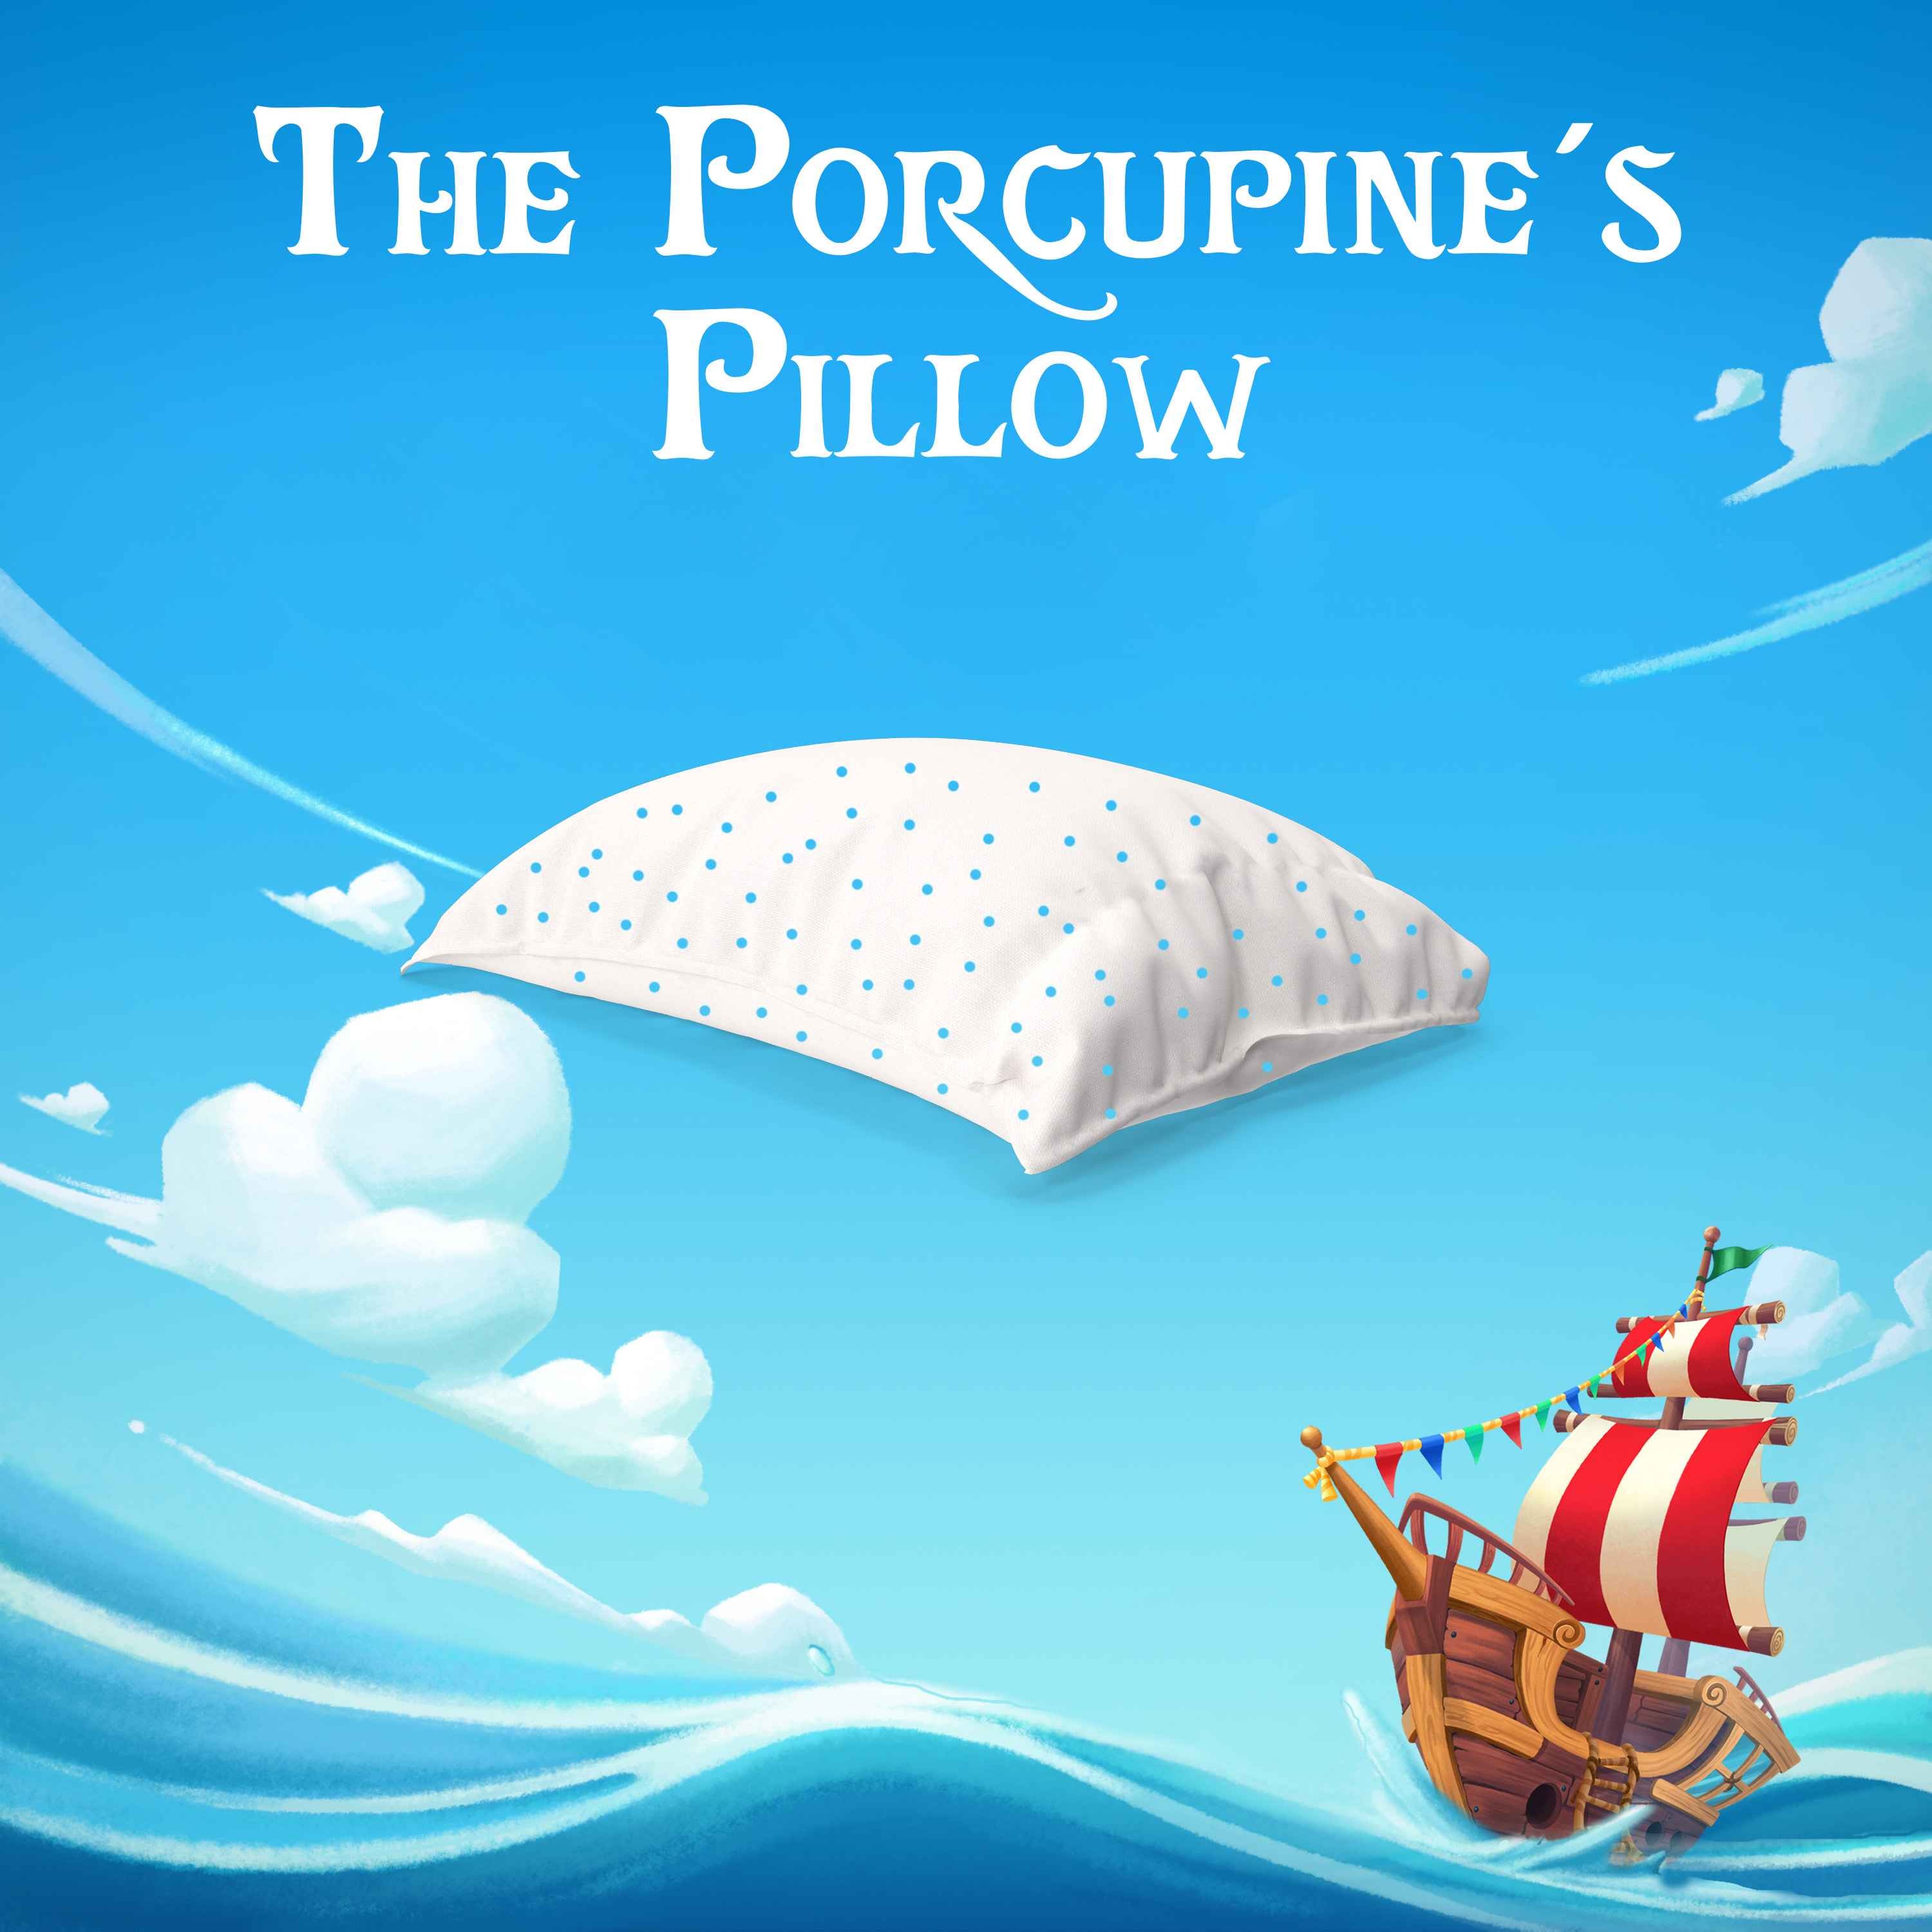 The Porcupine’s Pillow